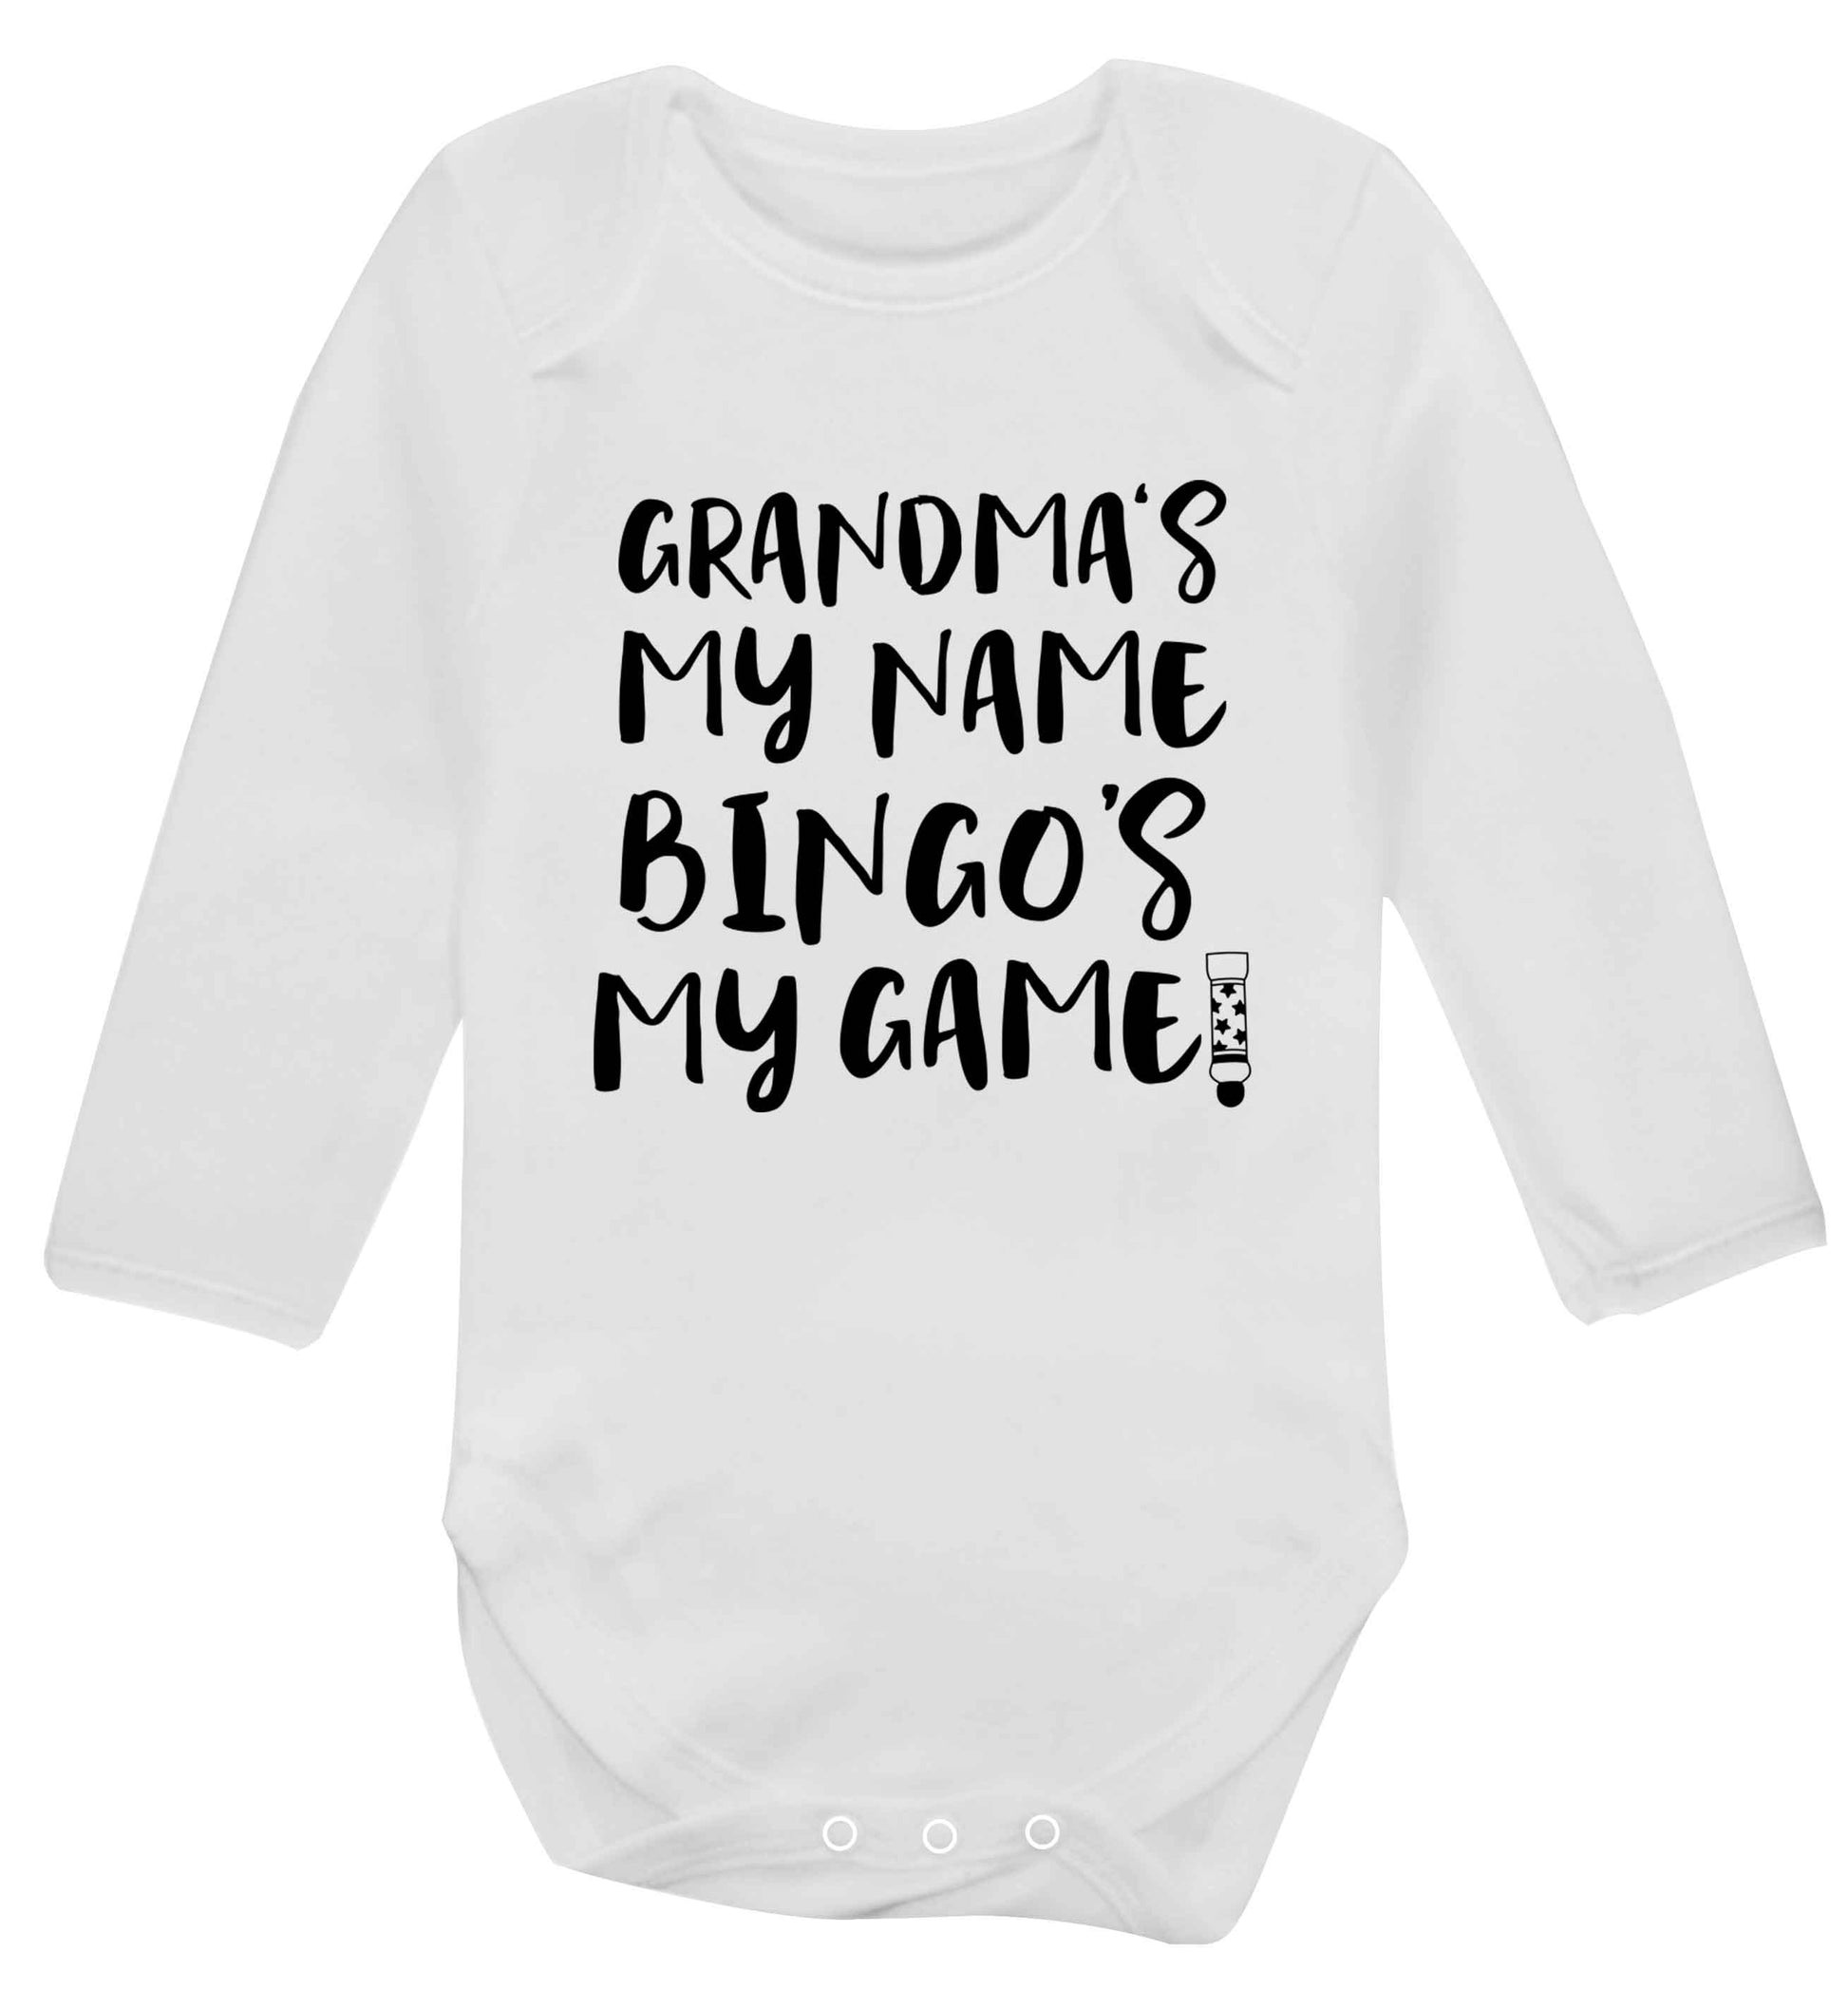 Grandma's my name bingo's my game! Baby Vest long sleeved white 6-12 months